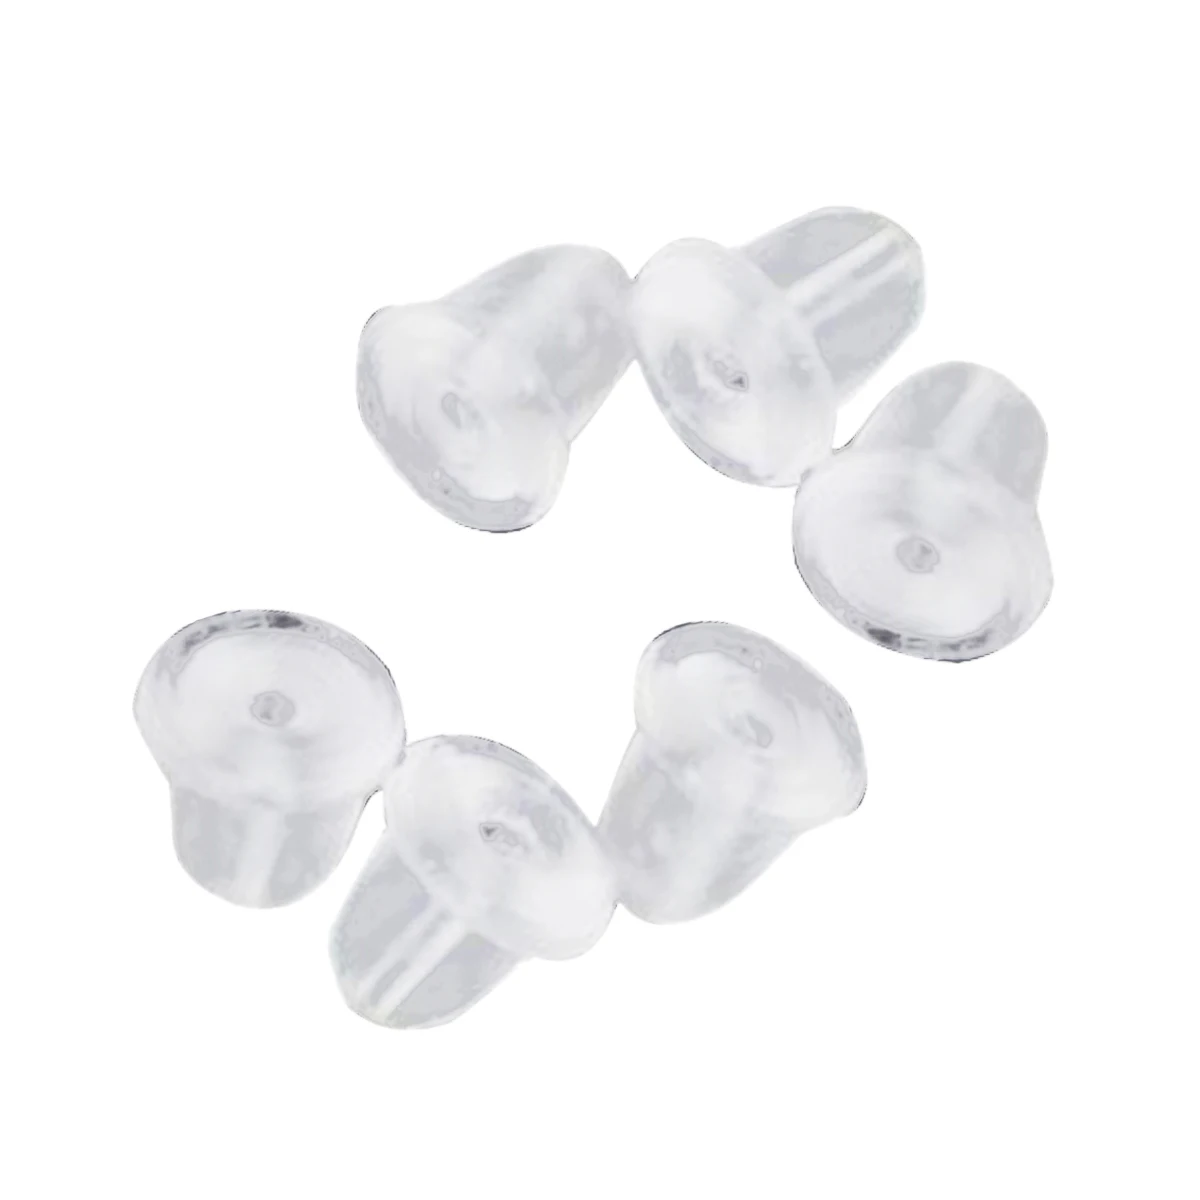 Фото 100pcs Translucent Rubber Earring Stopper Backs White 4mmx6mm | Украшения и аксессуары